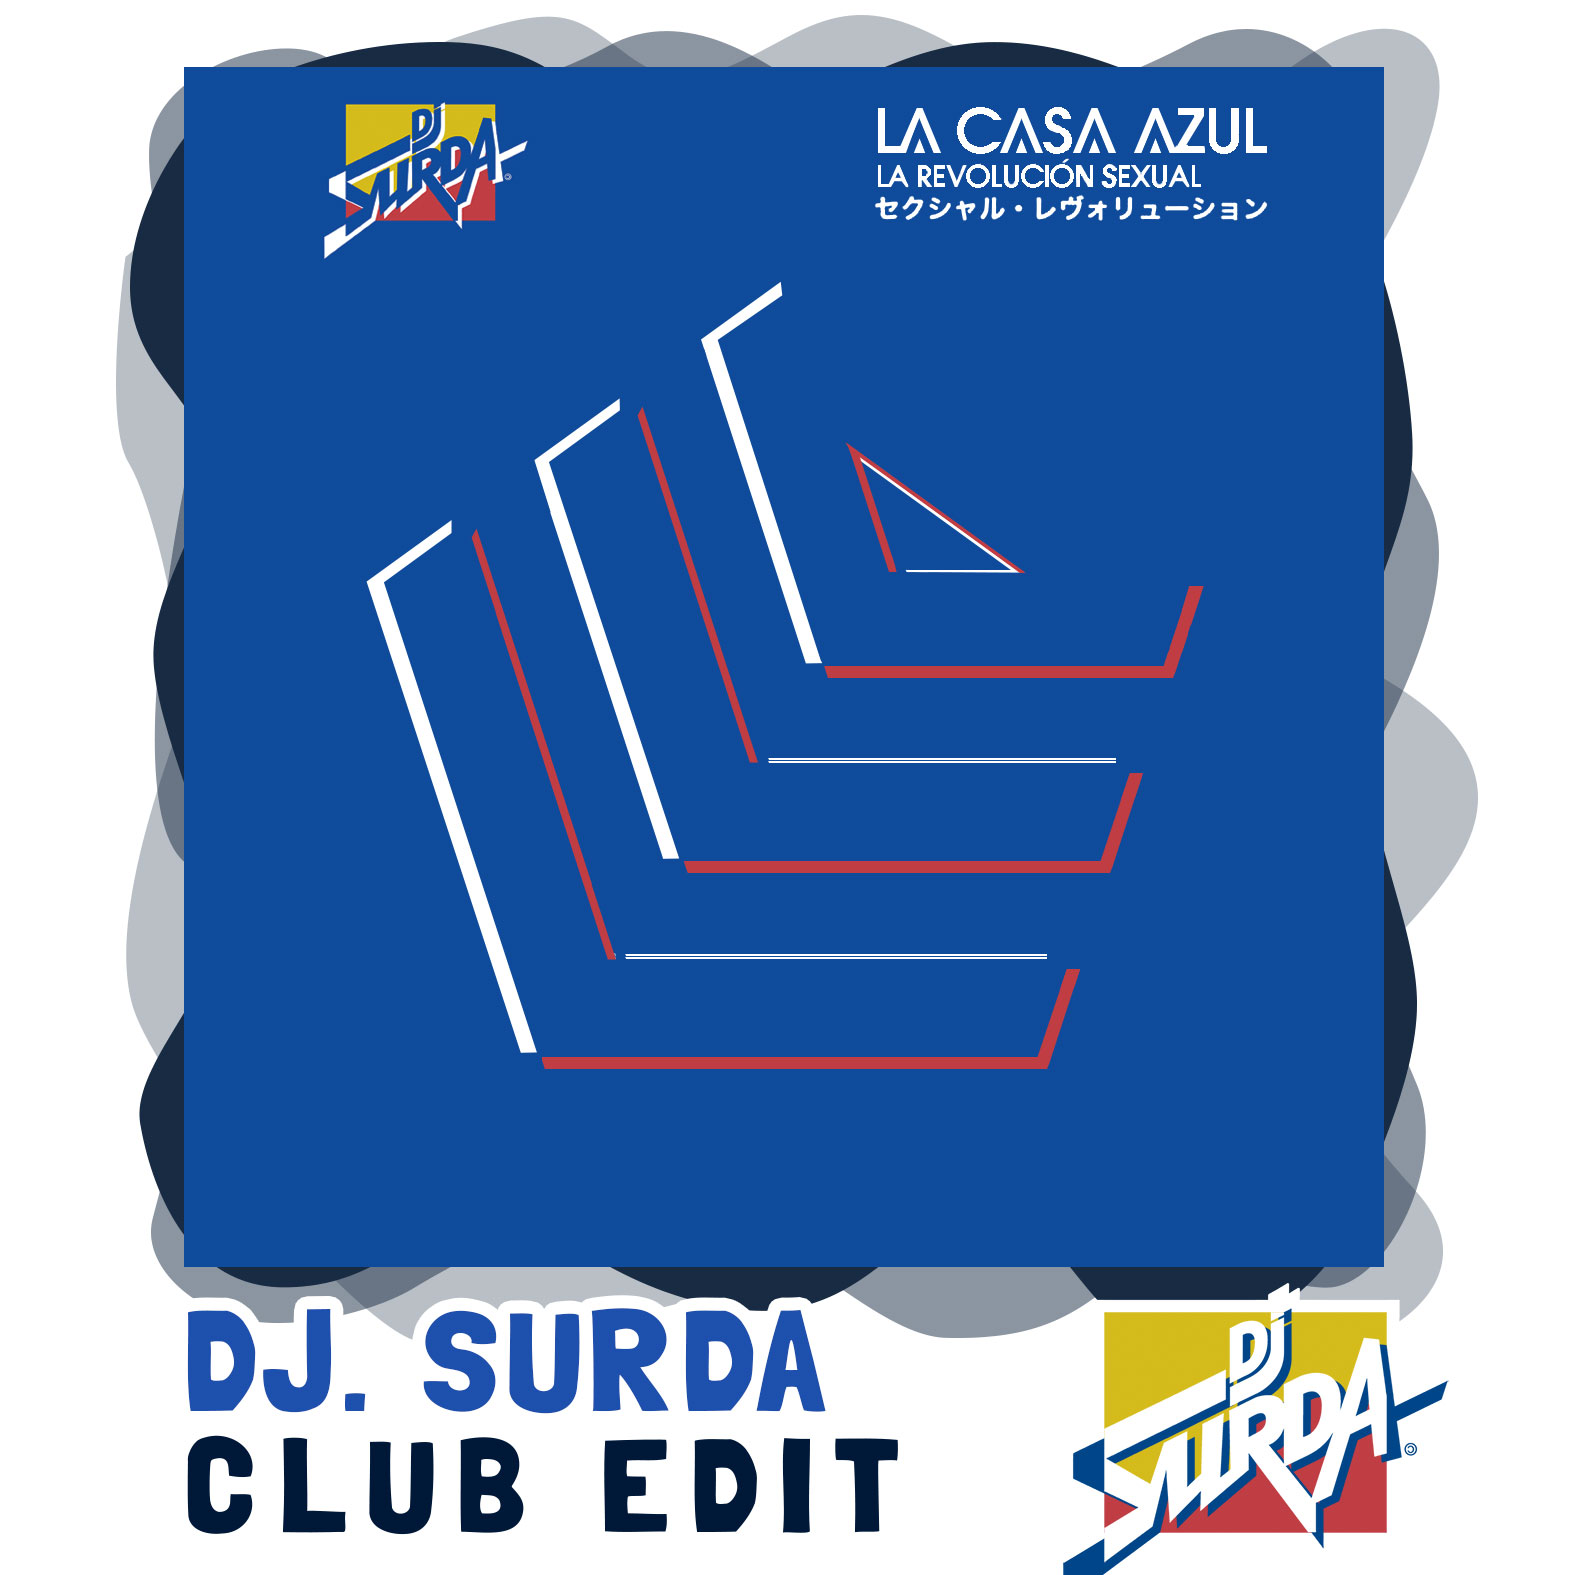 La Casa Azul – La Revolución Sexual (Dj. Surda Club Extended Edit)